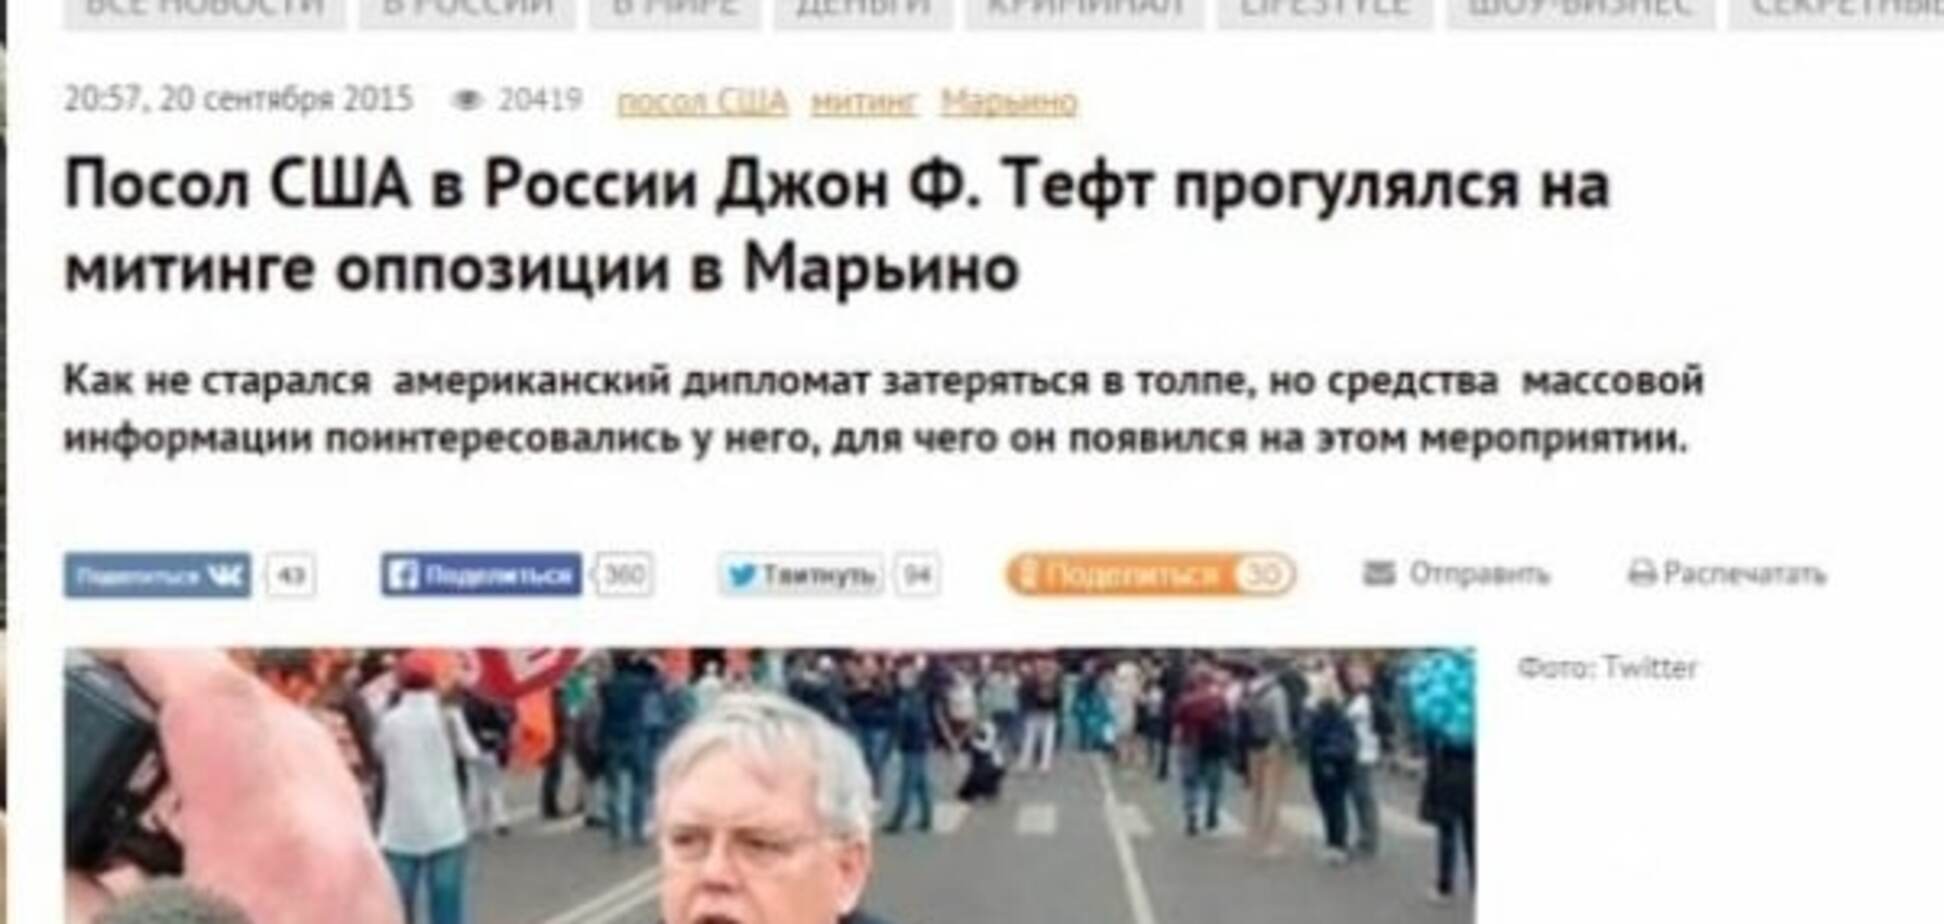 Фотошоп forever: росСМИ дорисовало на фото из митинга в Марьино посла США